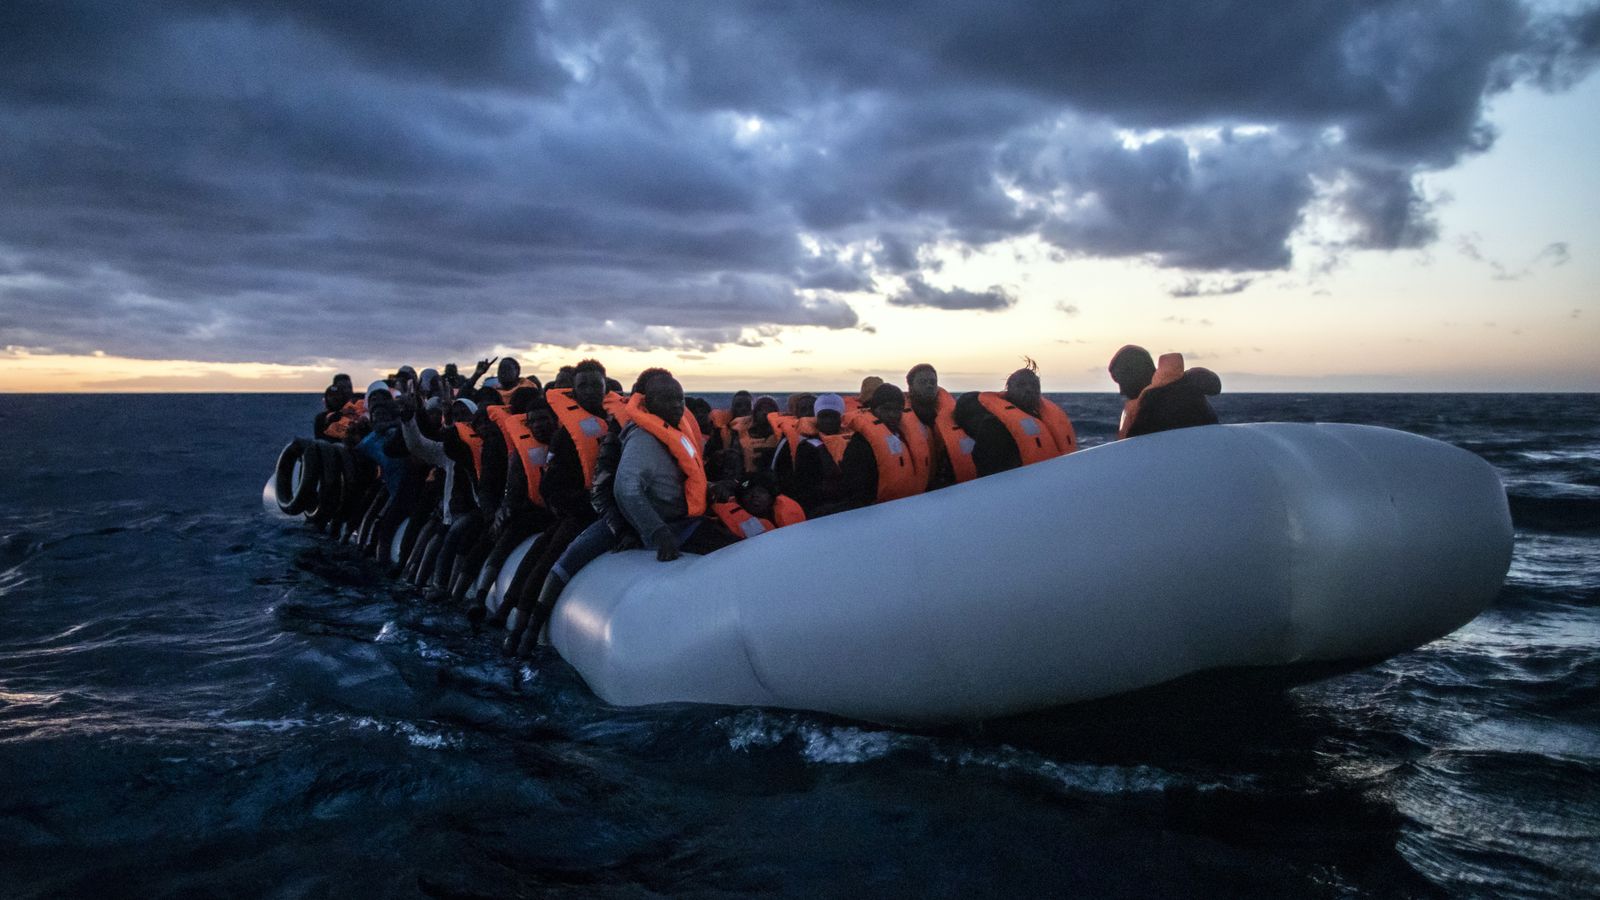 Photos show migrants evading Libyan coast guard to reach Europe